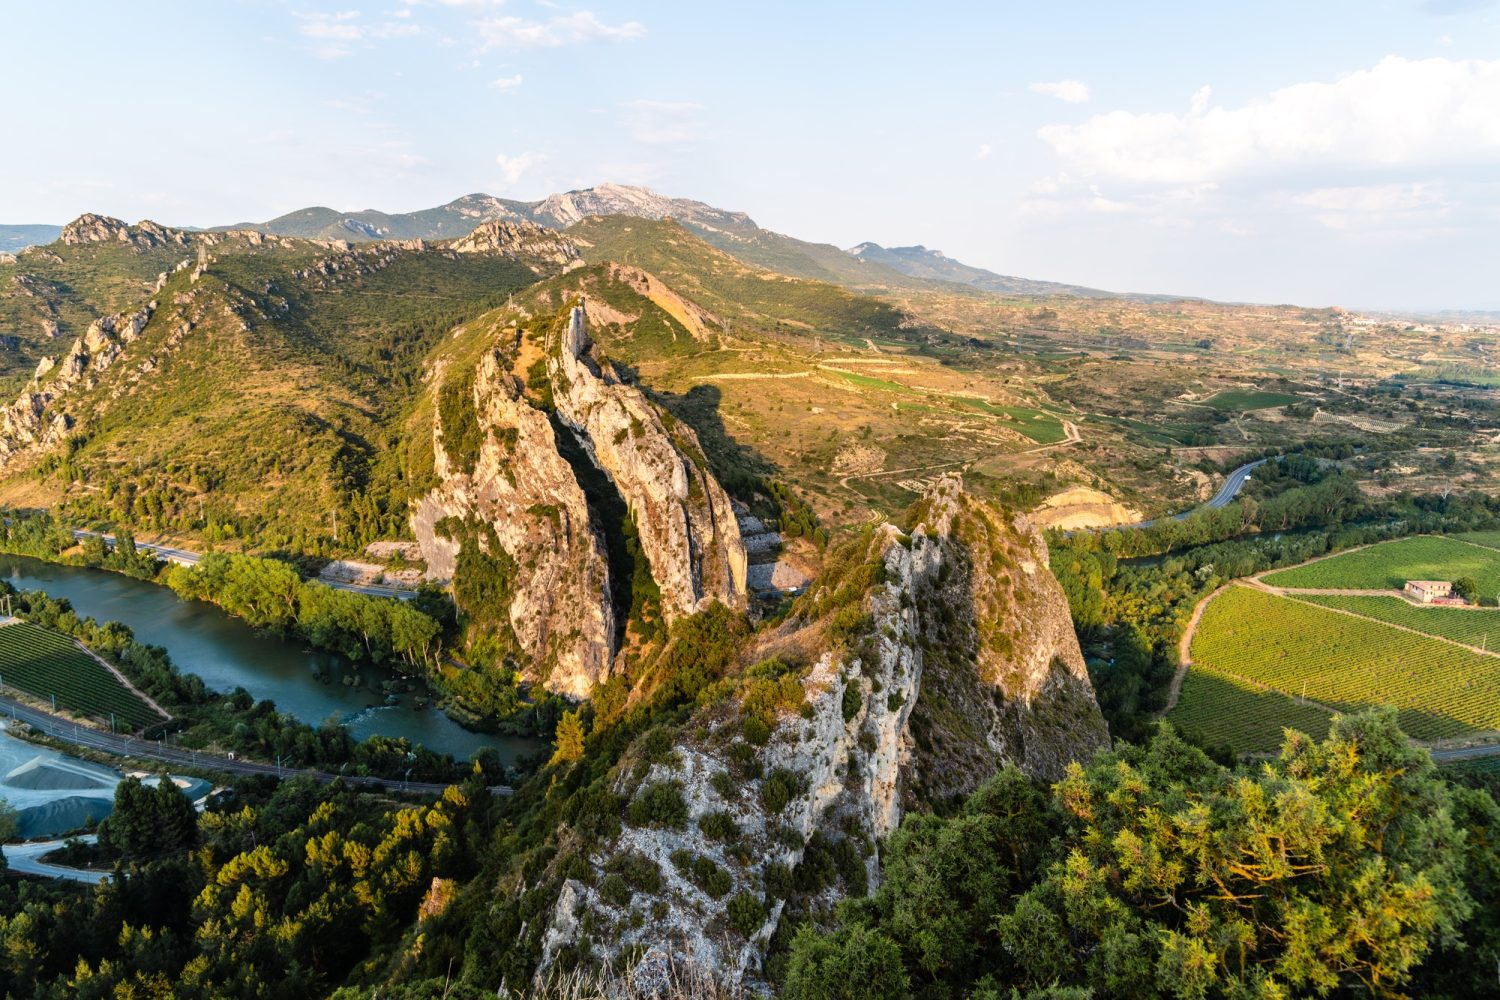 Mountain formations and the Ebro river in La Rioja